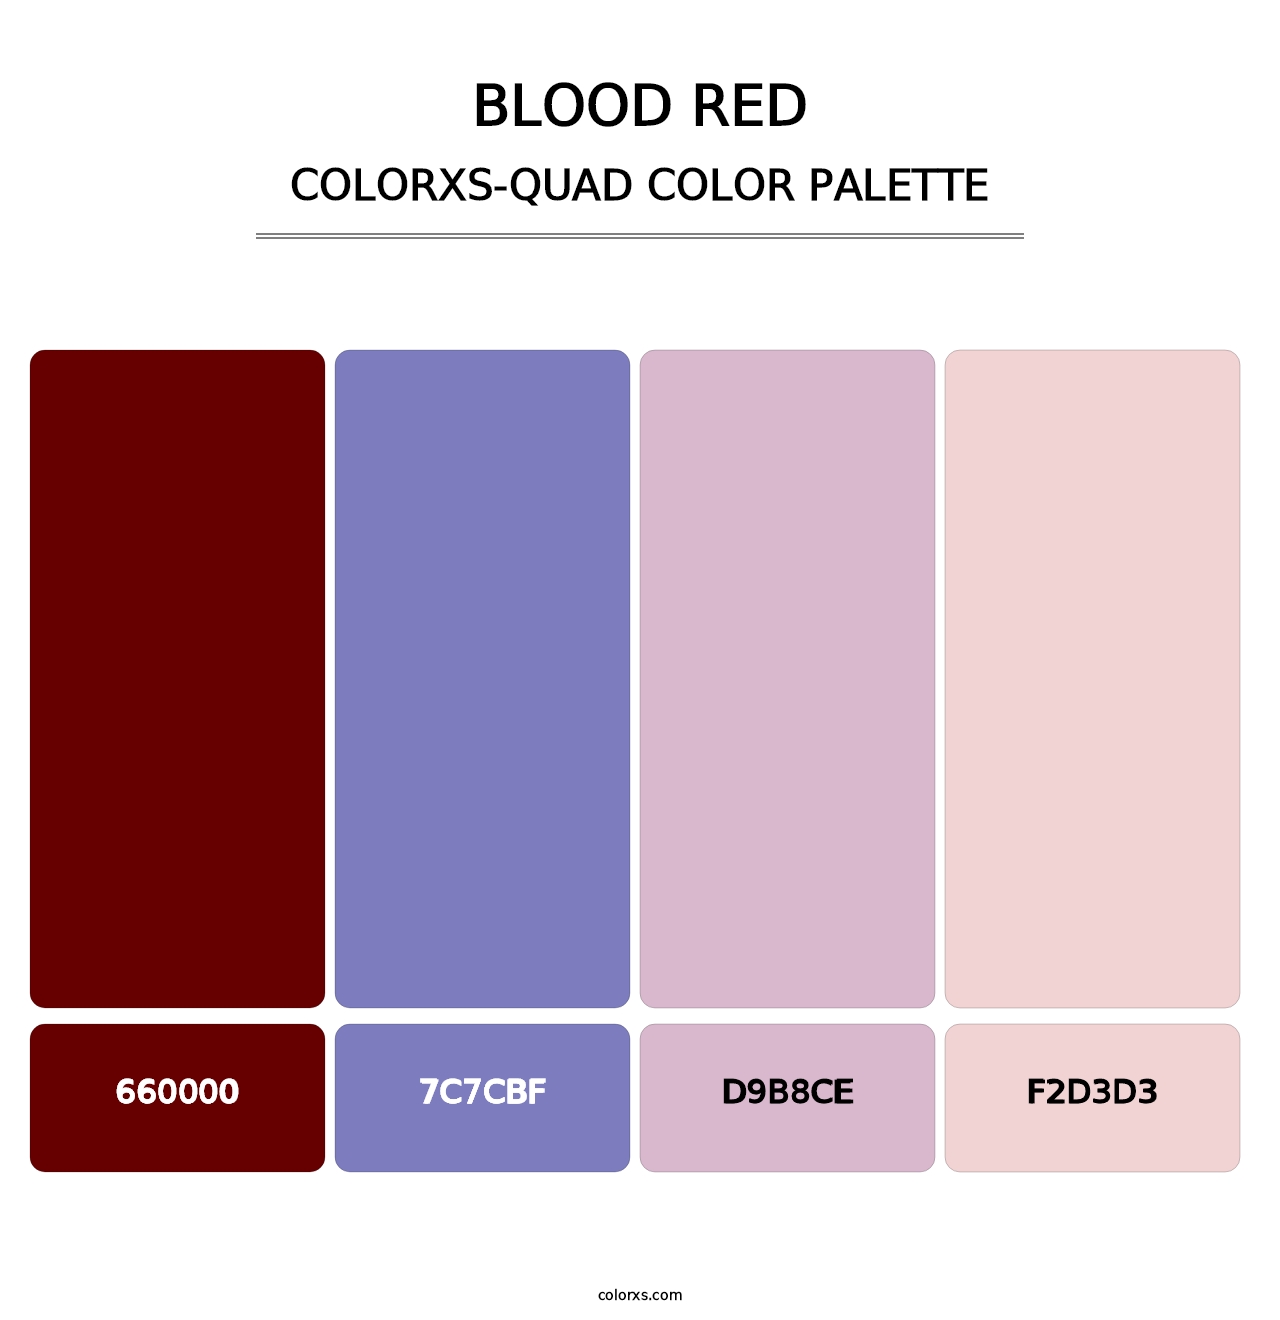 Blood Red - Colorxs Quad Palette